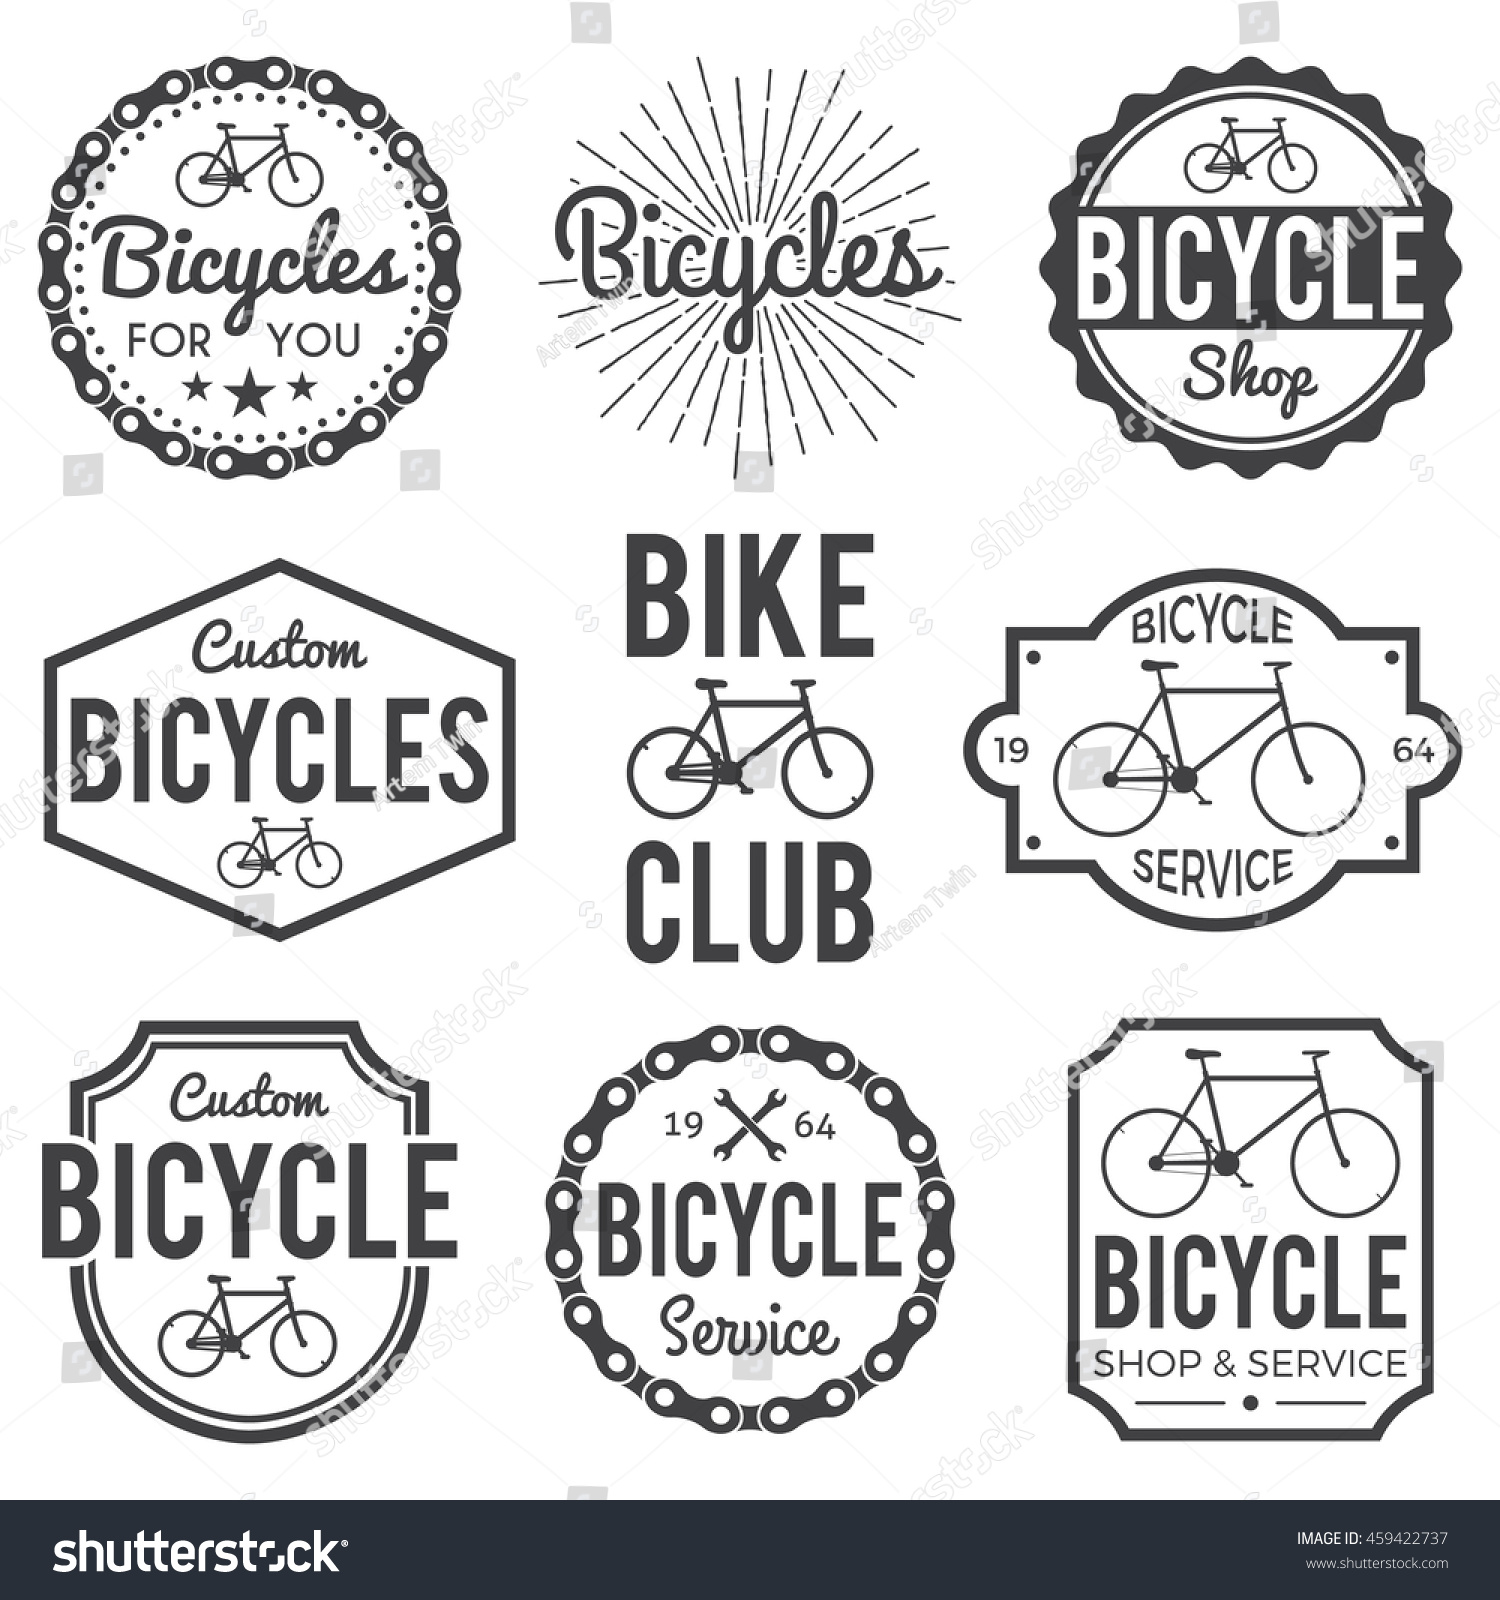 custom bicycle shop